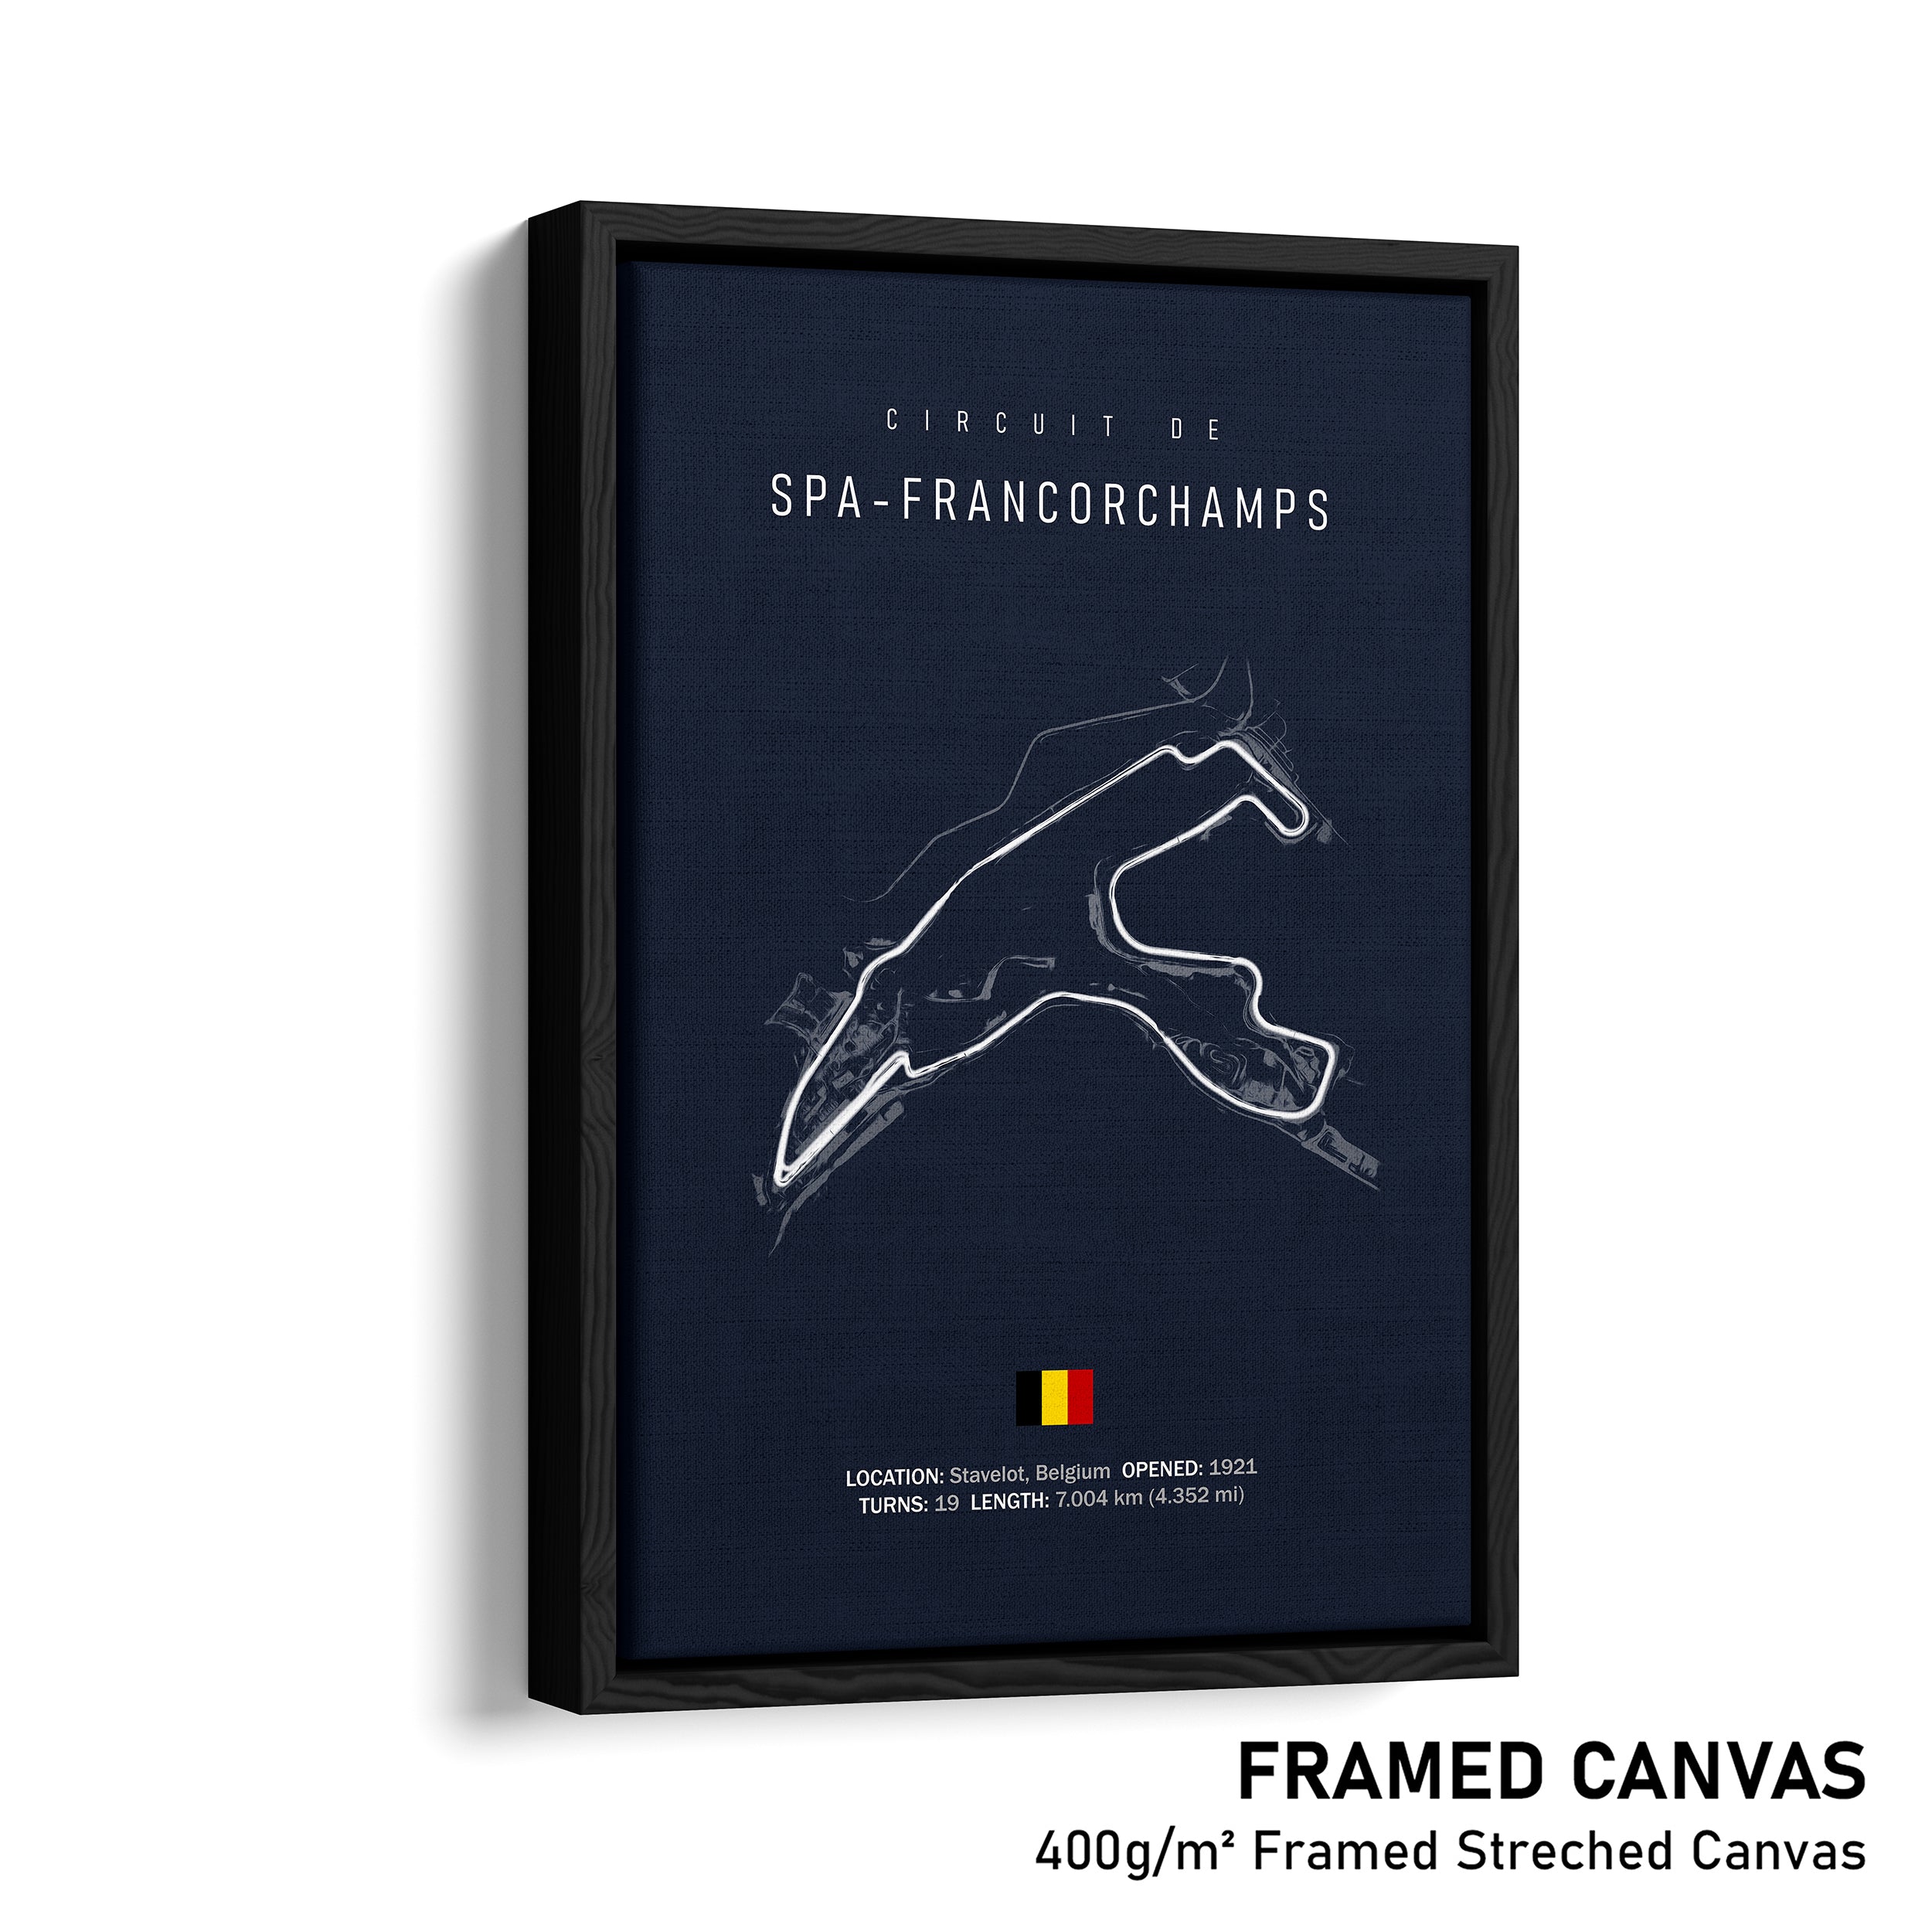 Circuit de Spa-Francorchamps - Racetrack Framed Canvas Print